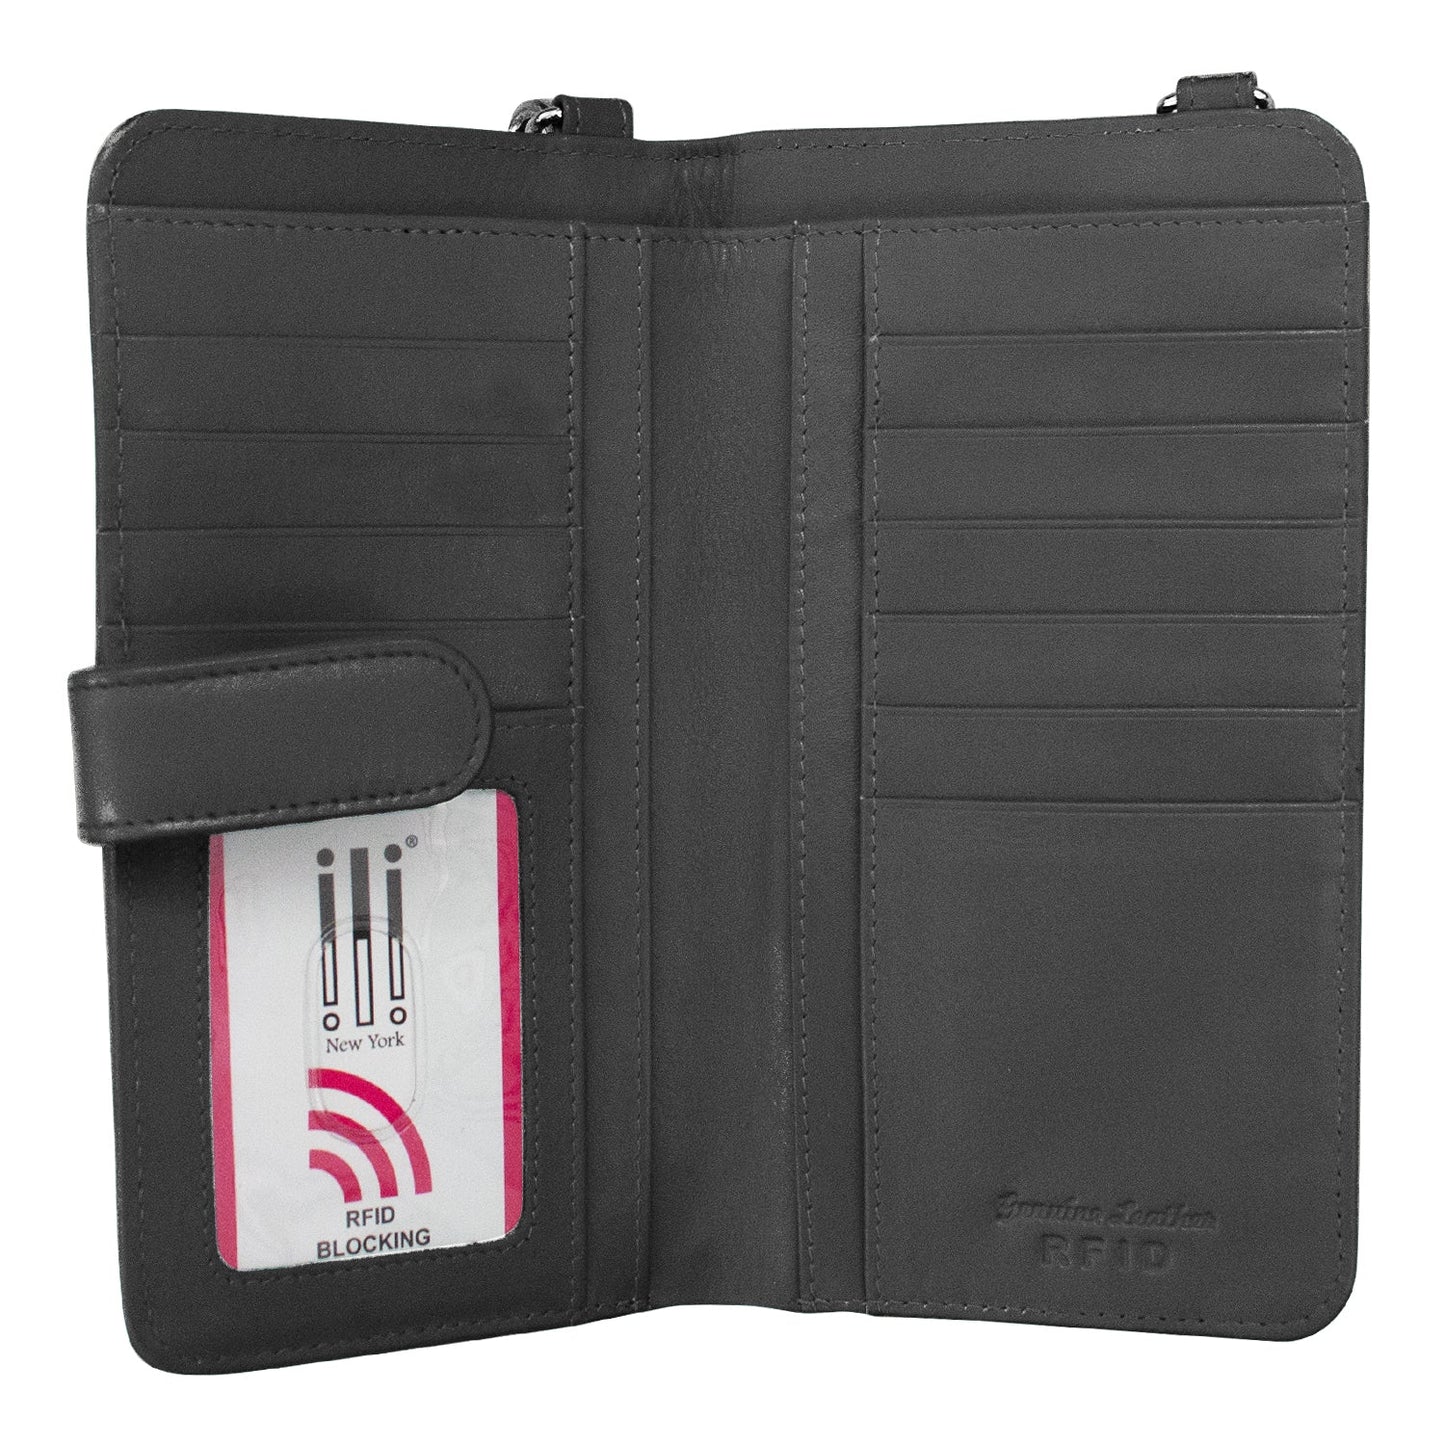 ili New York - RFID blocking leather Phone Wallet Crossbody